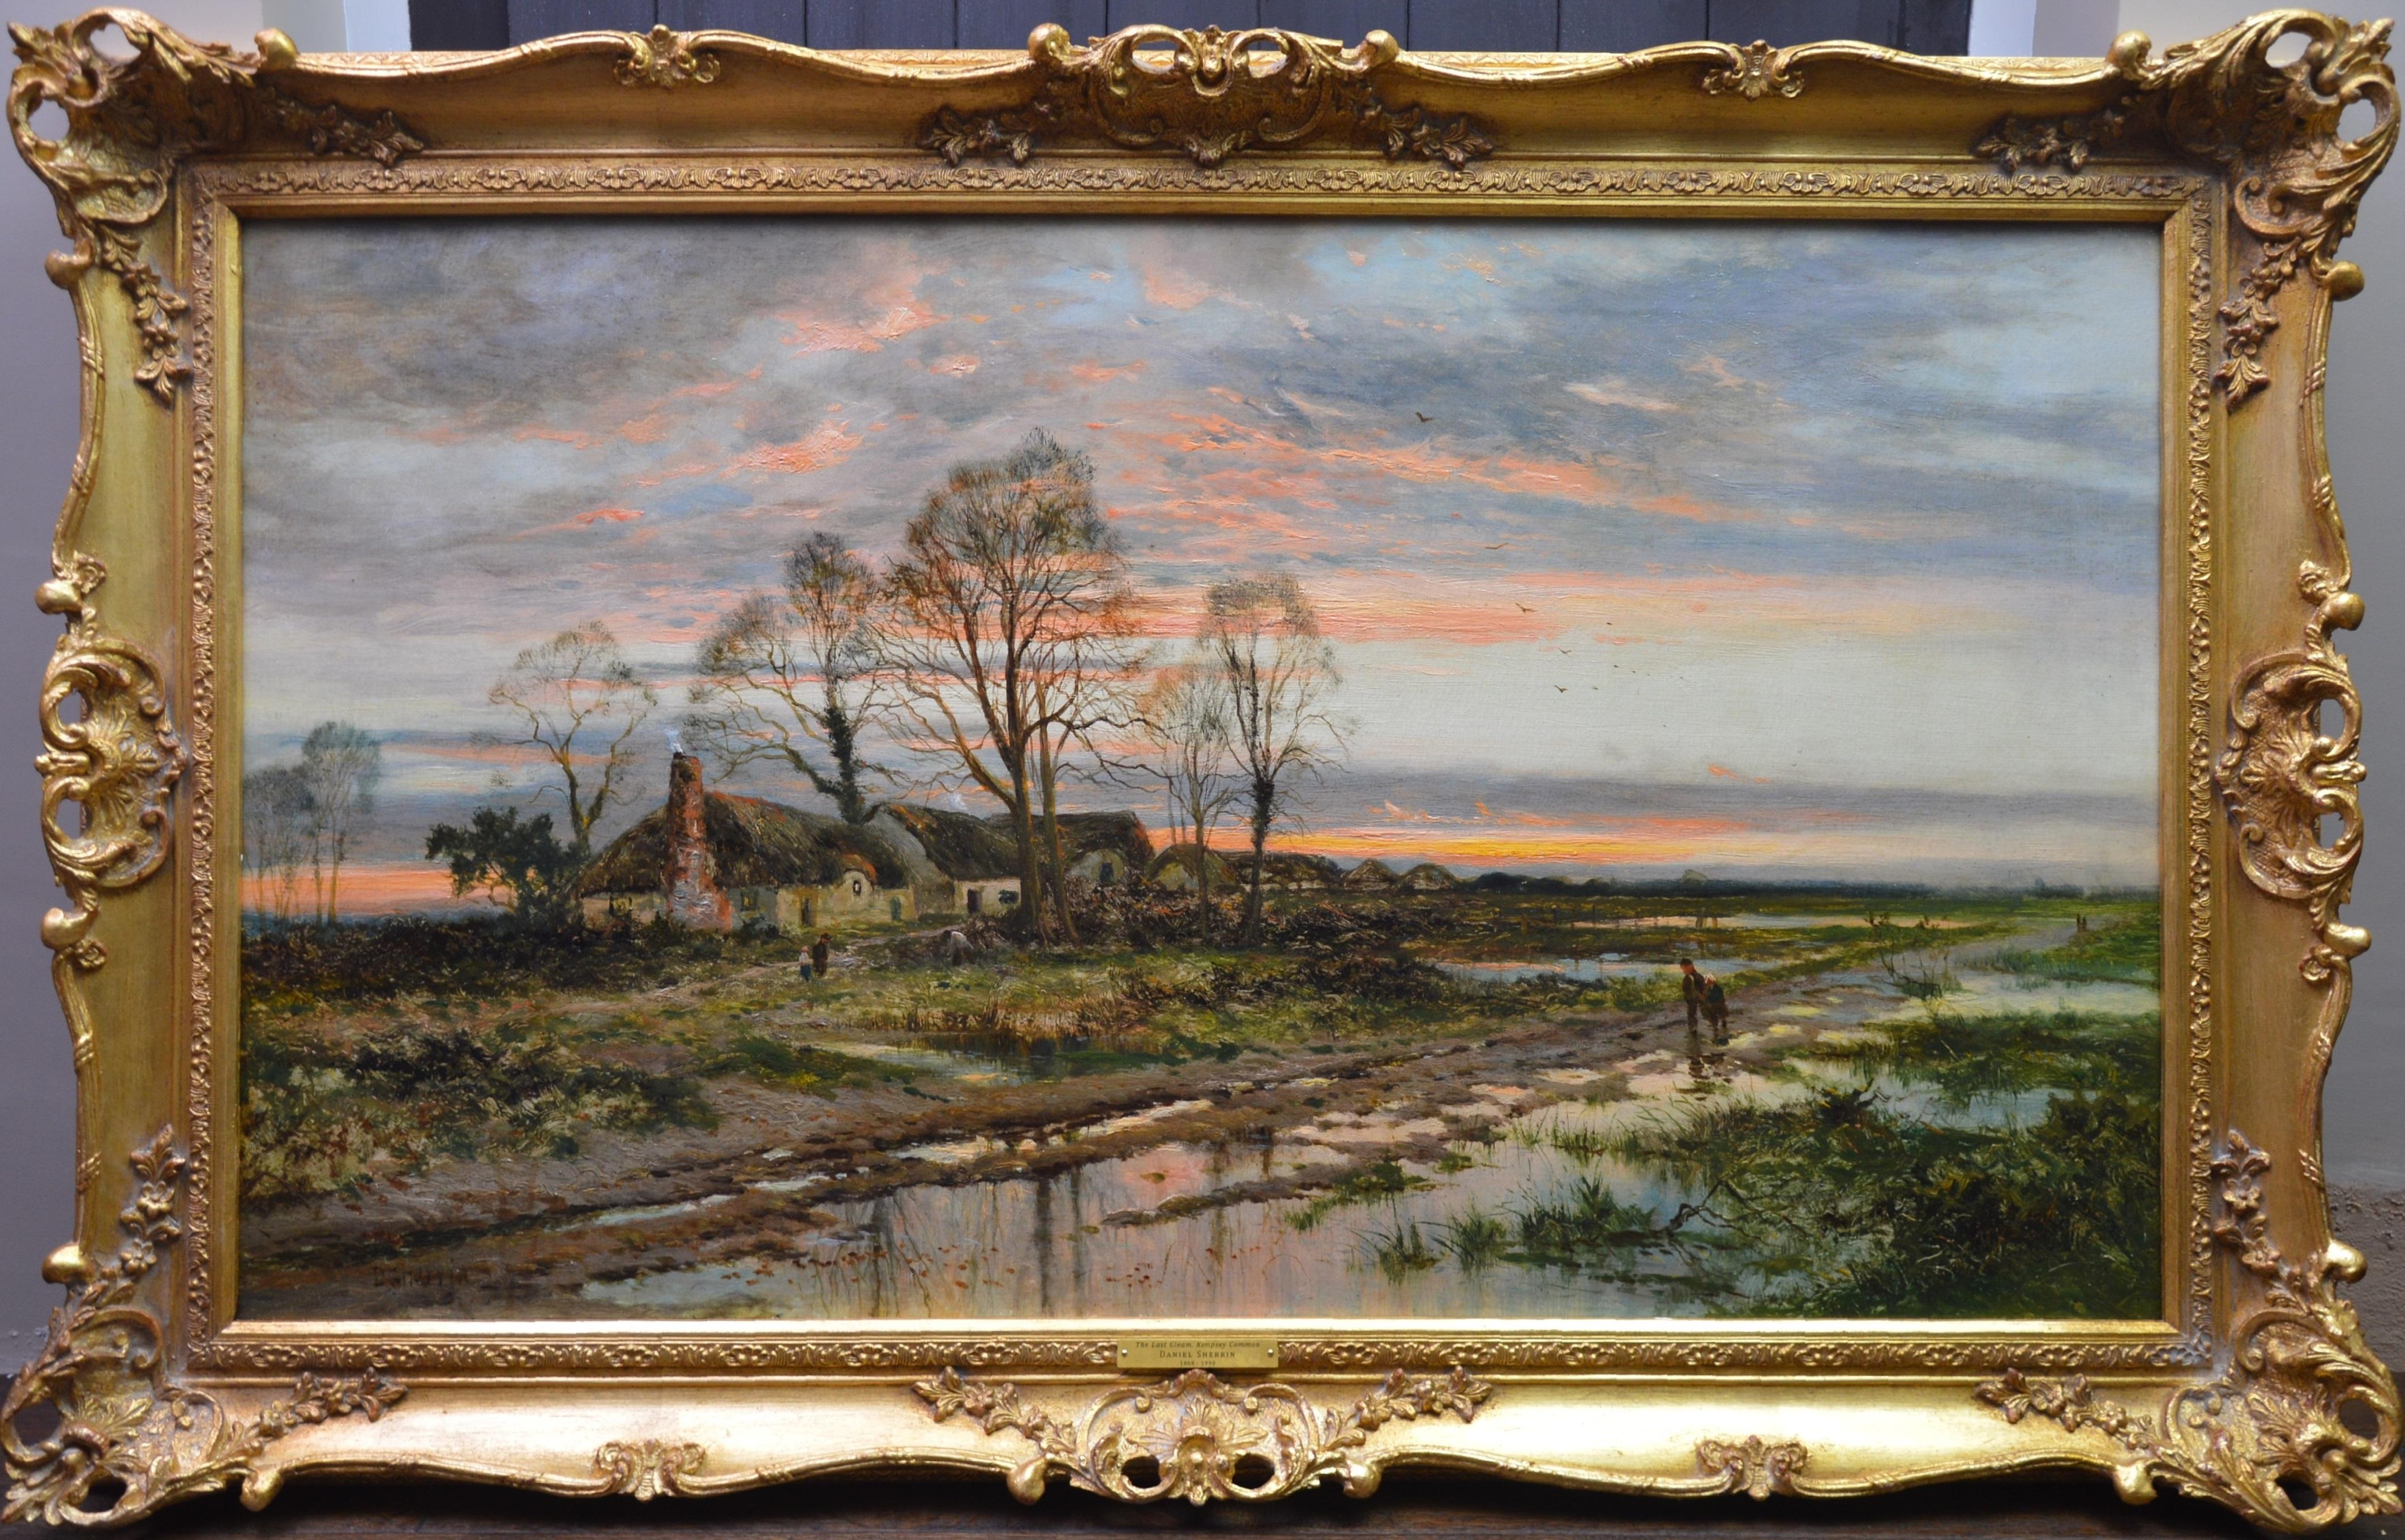 Daniel Sherrin Figurative Painting - The Last Gleam, Kempsey Common - 19th Century Sunset Landscape Oil Painting